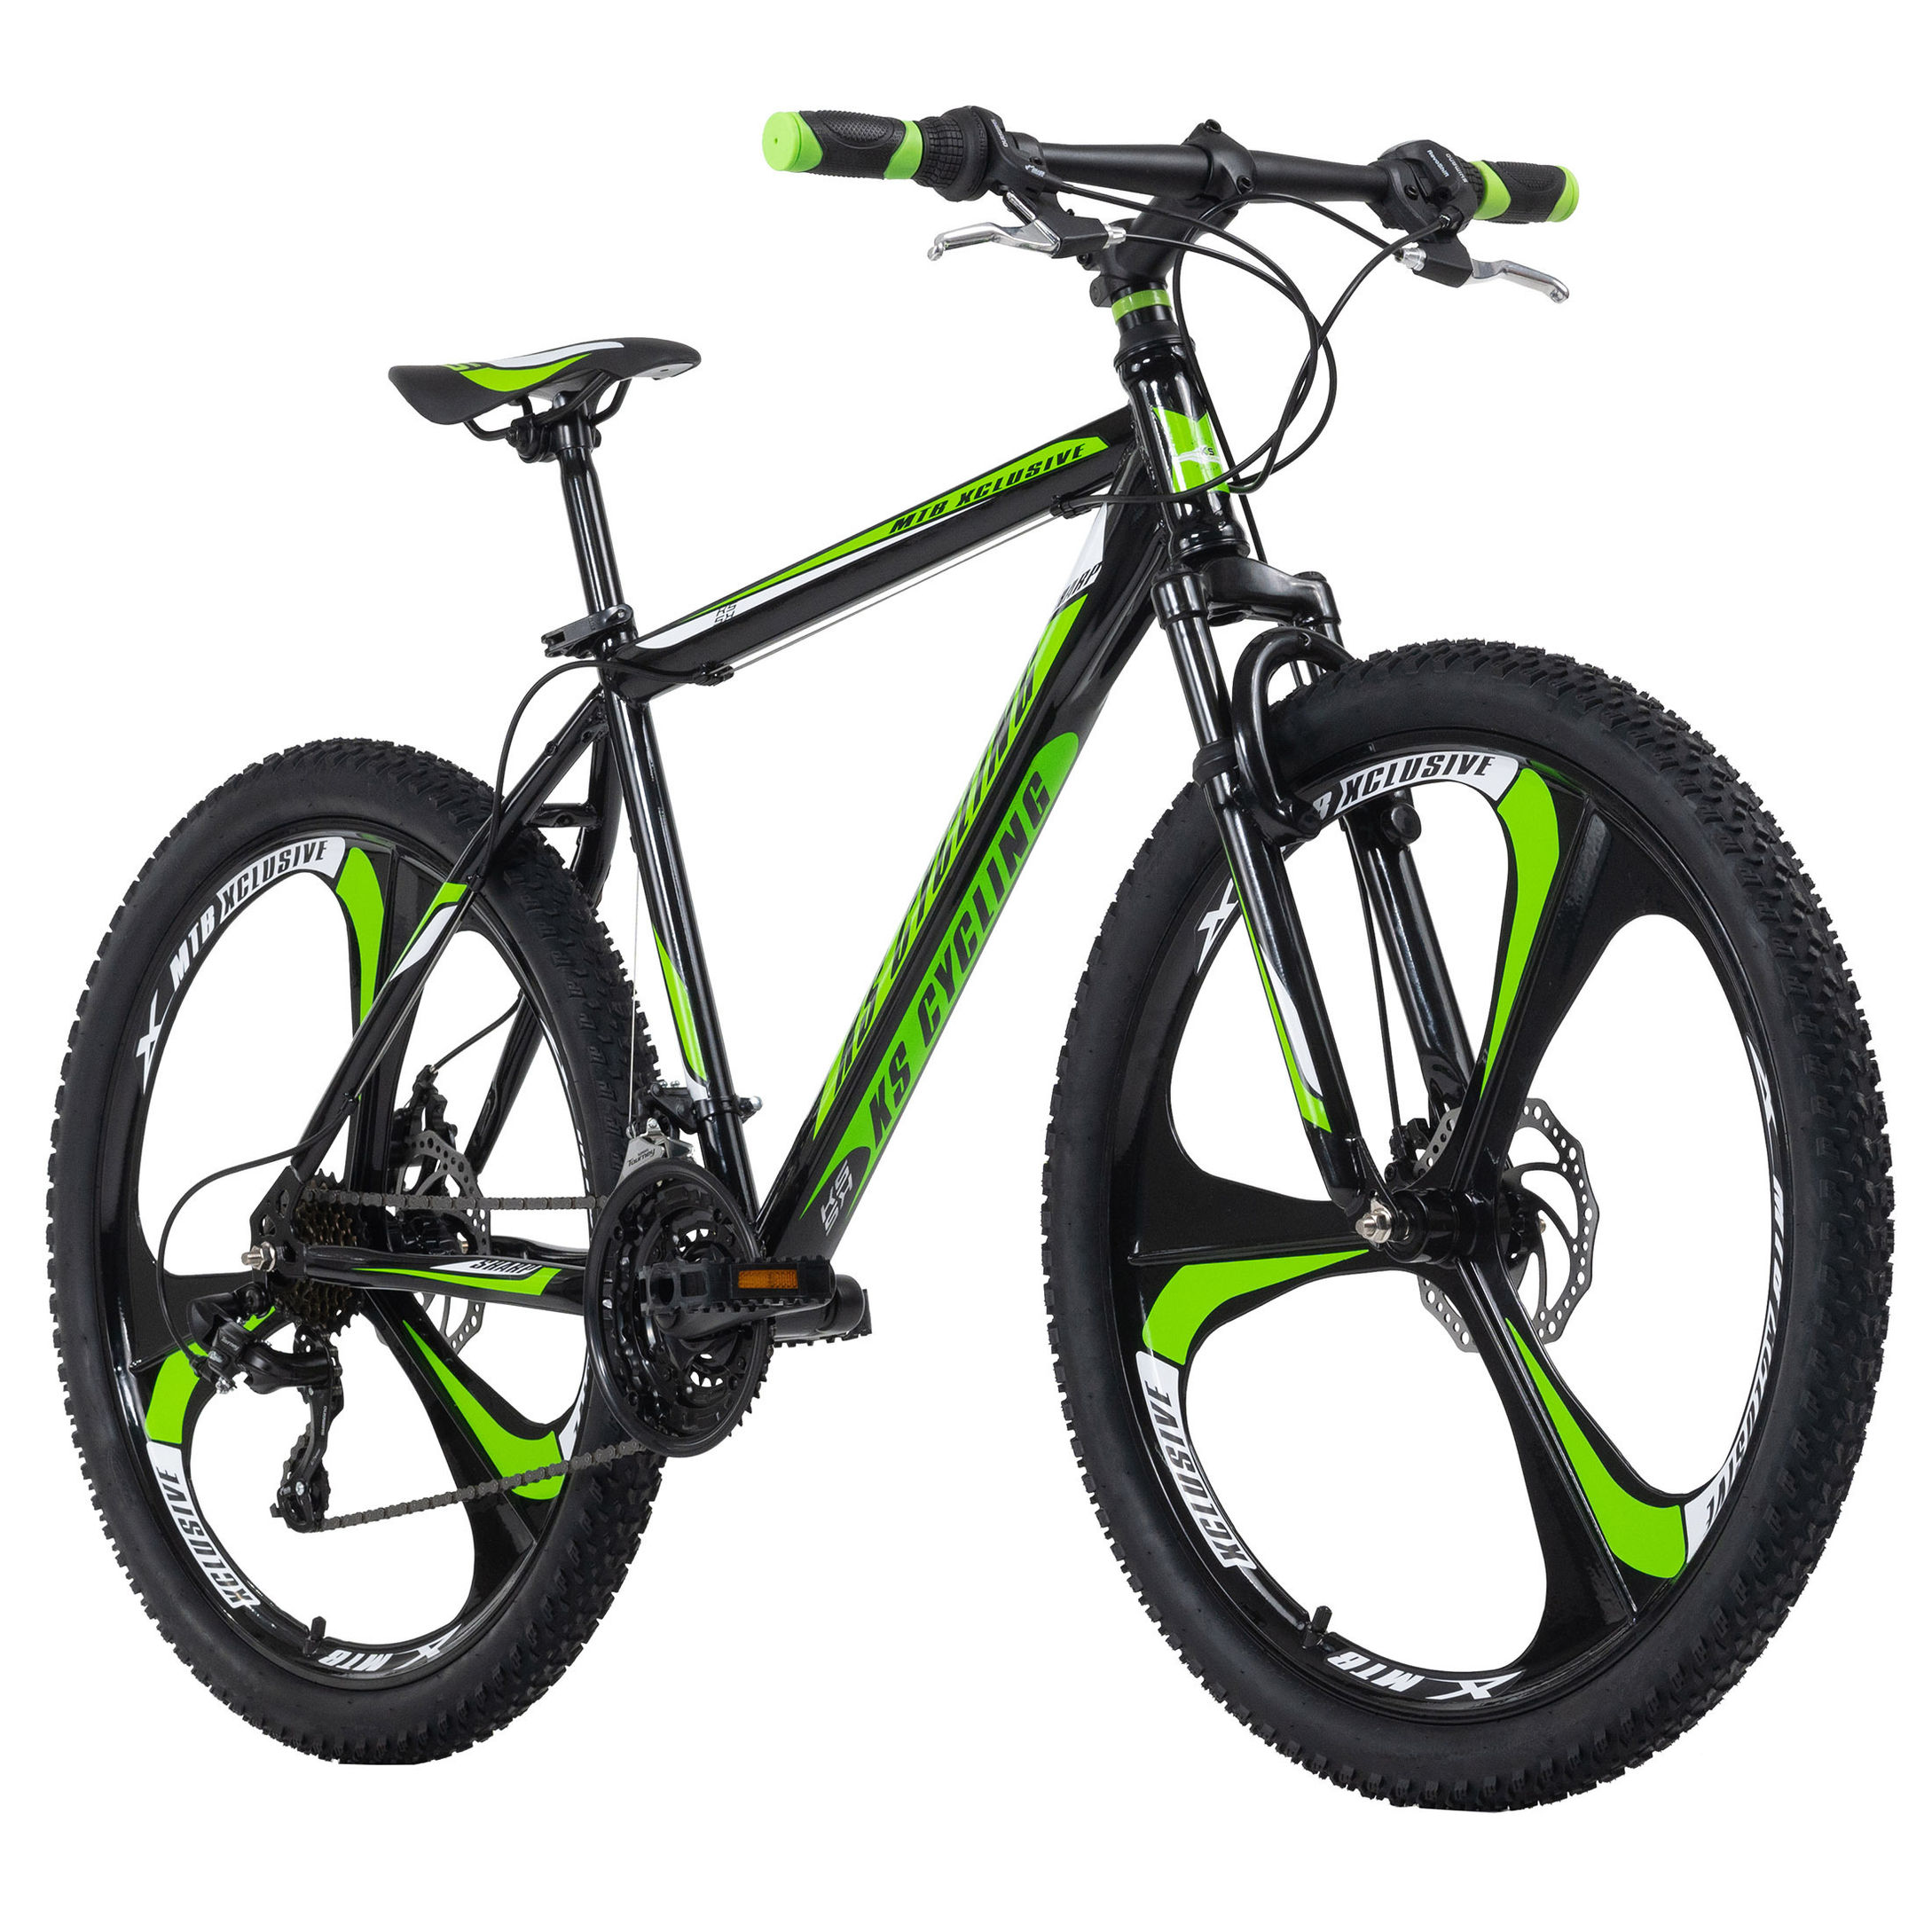 KS Cycling Mountainbike Hardtail 26 Zoll Sharp schwarz-grün schwarz-grün  Größe: 51 cm | Weltbild.de